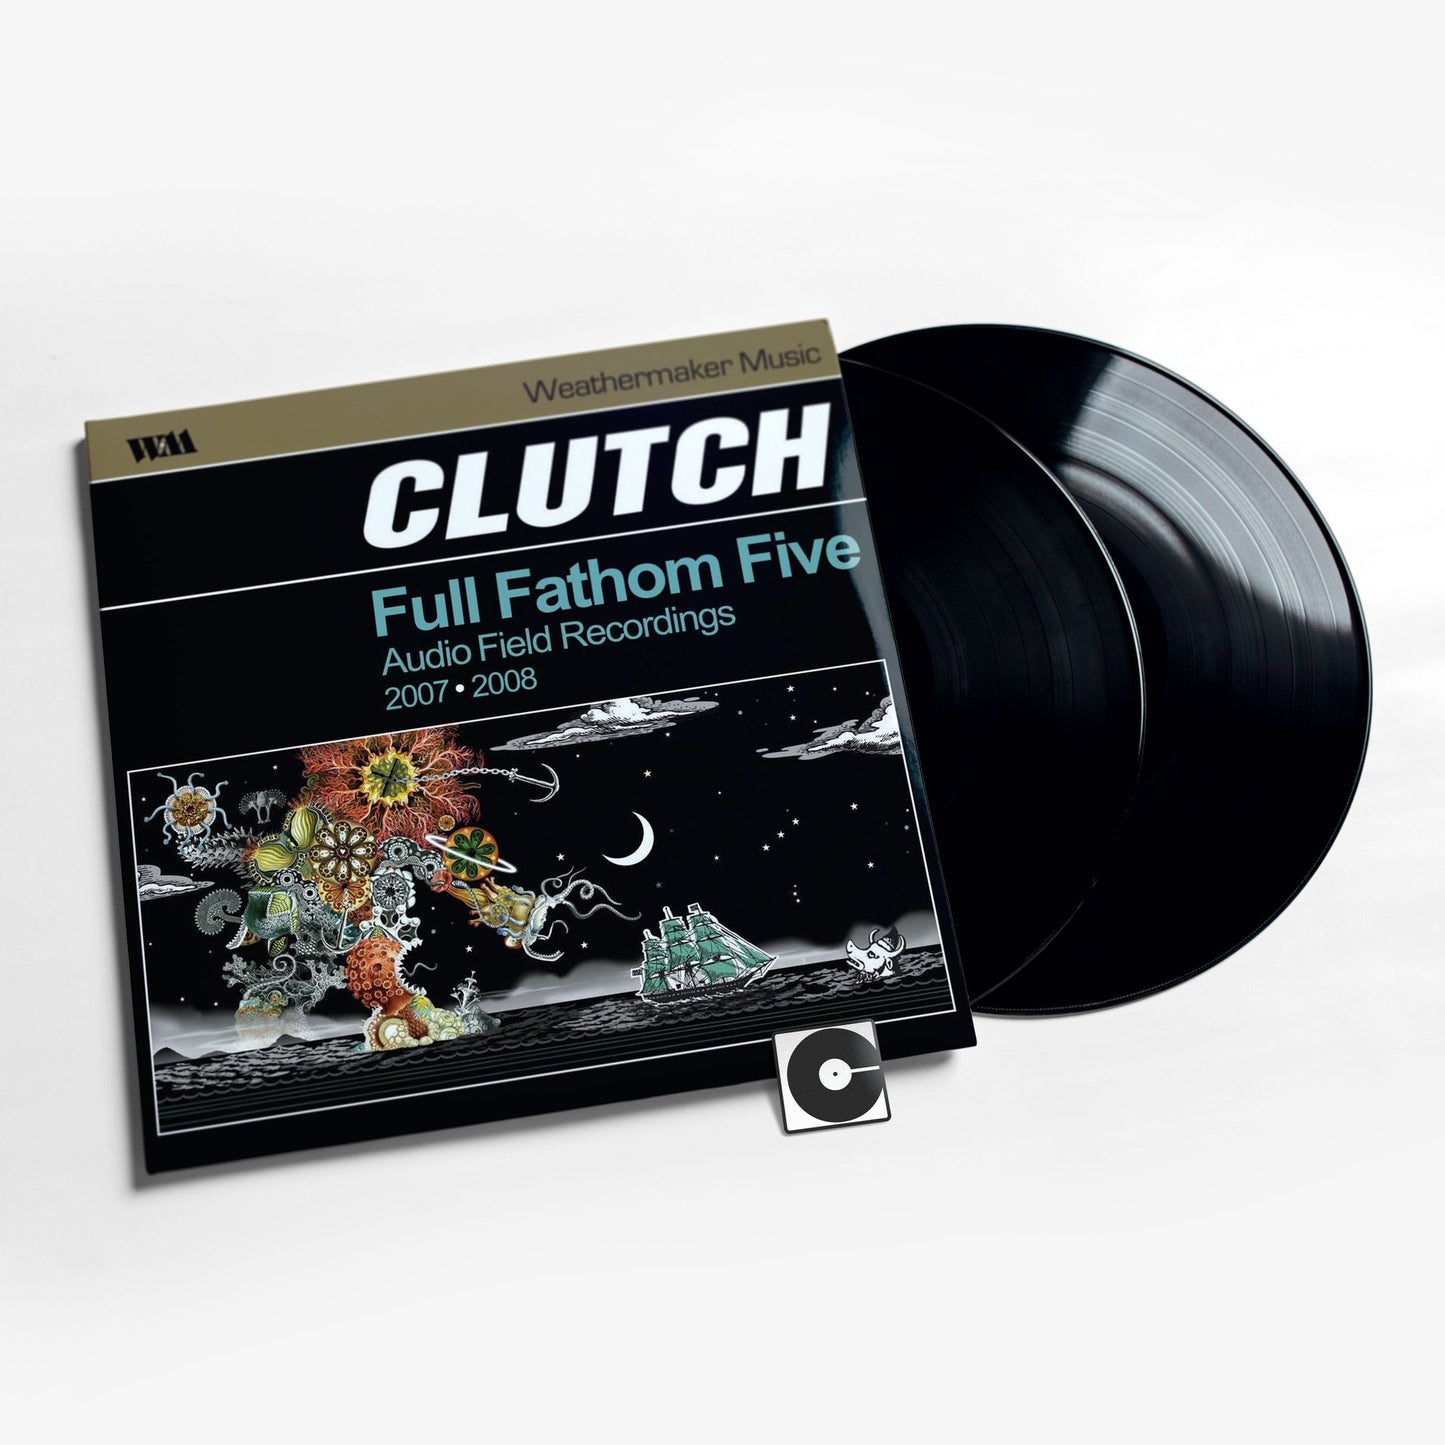 Clutch - "Full Fathom Five Audio Field Recordings 2007-2008"